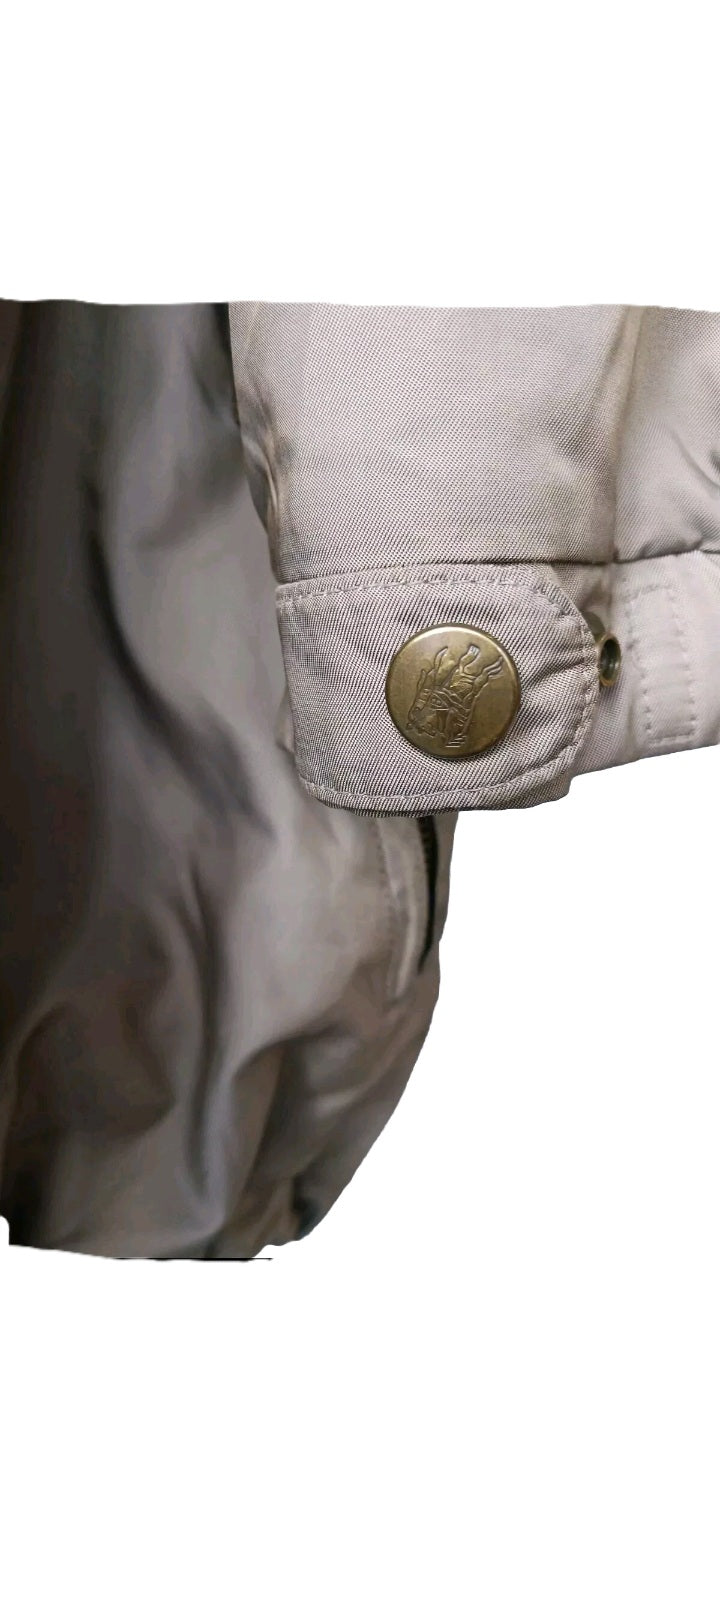 Burberry Jacket With Detachable Fur Trimmed Hood, Size Medium